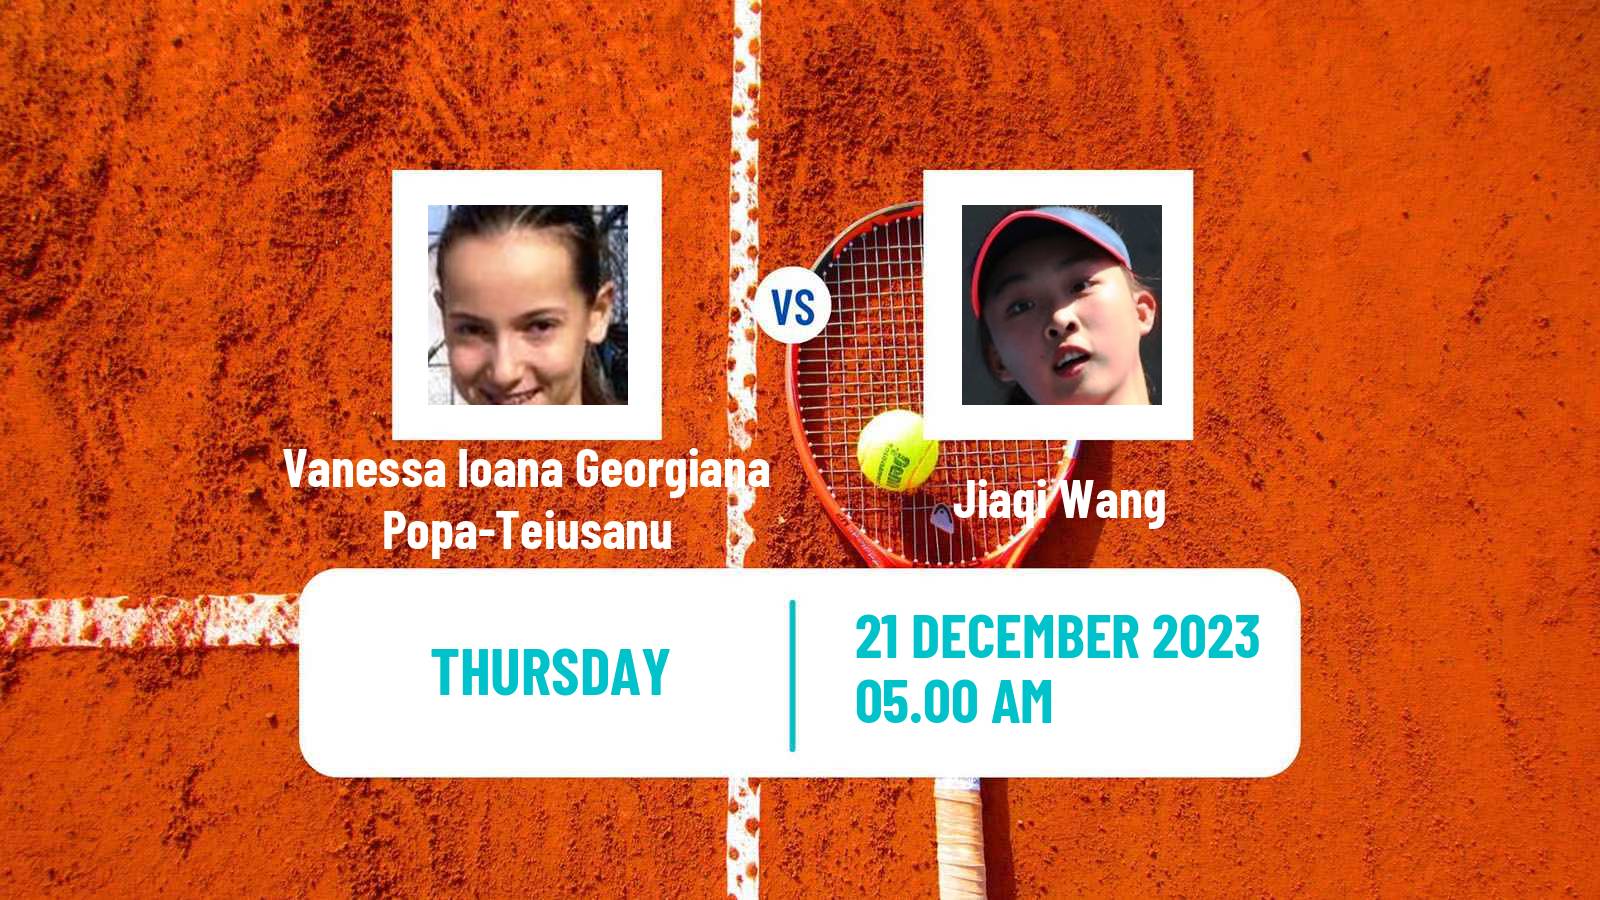 Tennis ITF W15 Monastir 43 Women Vanessa Ioana Georgiana Popa-Teiusanu - Jiaqi Wang